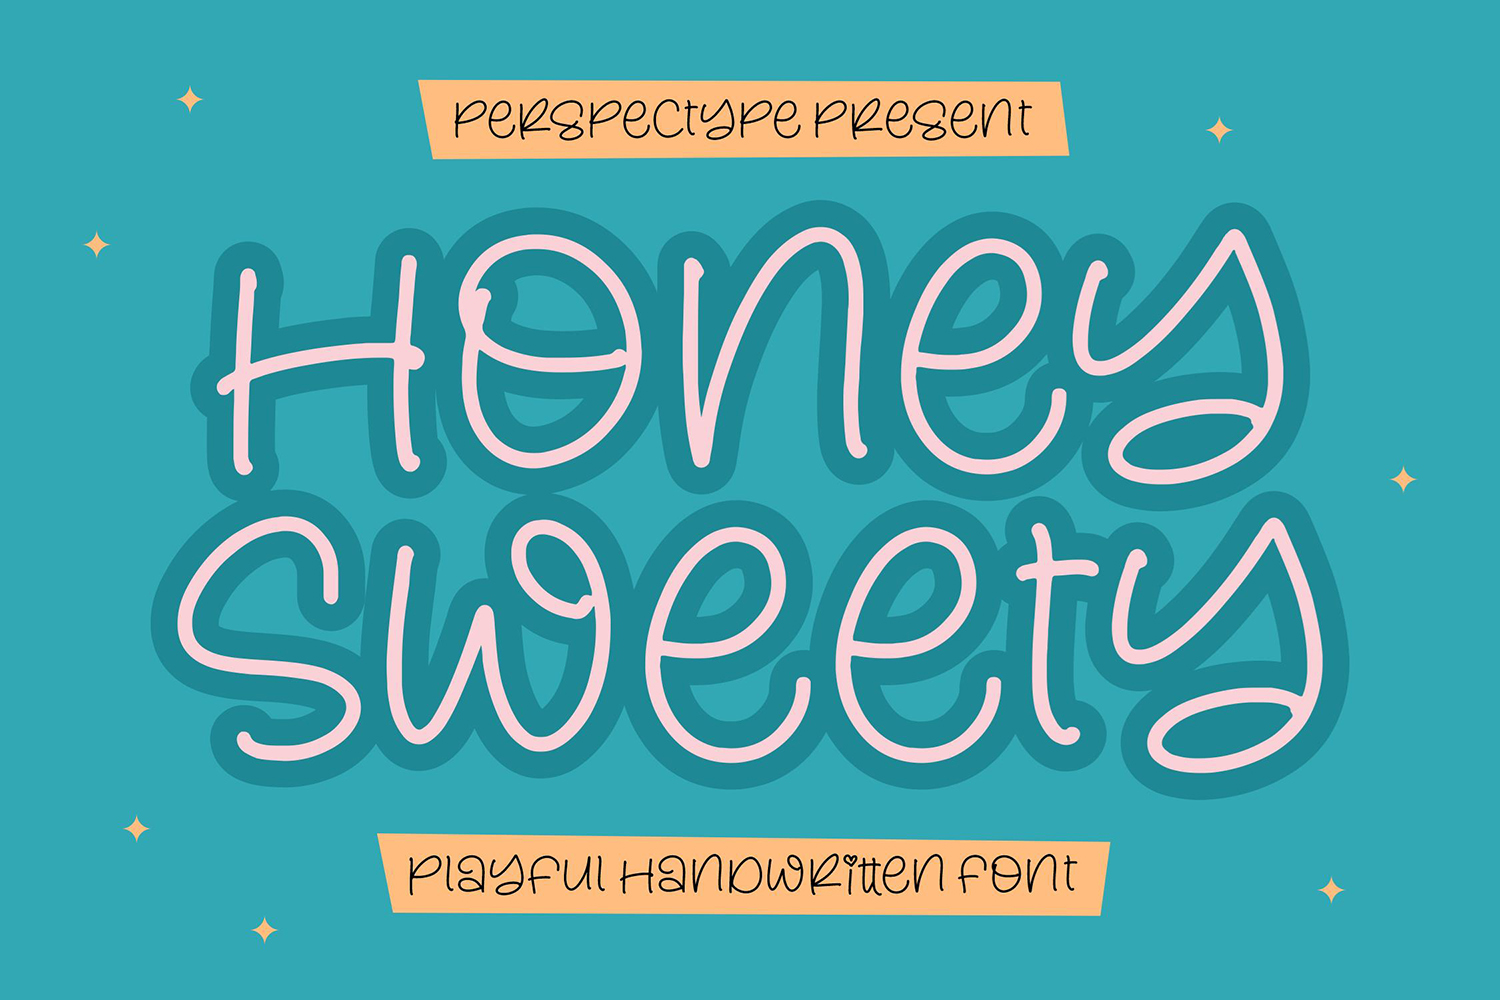 Honey Sweety Free Font